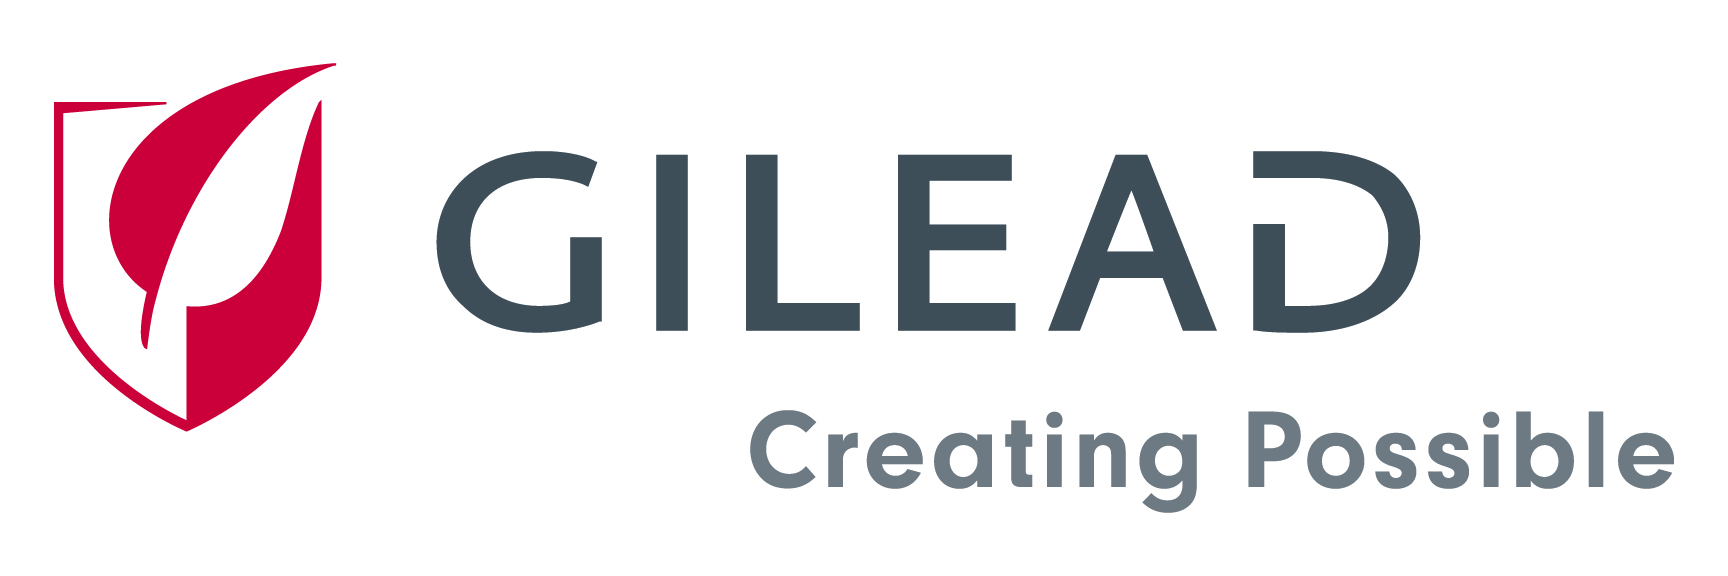 logo gilead